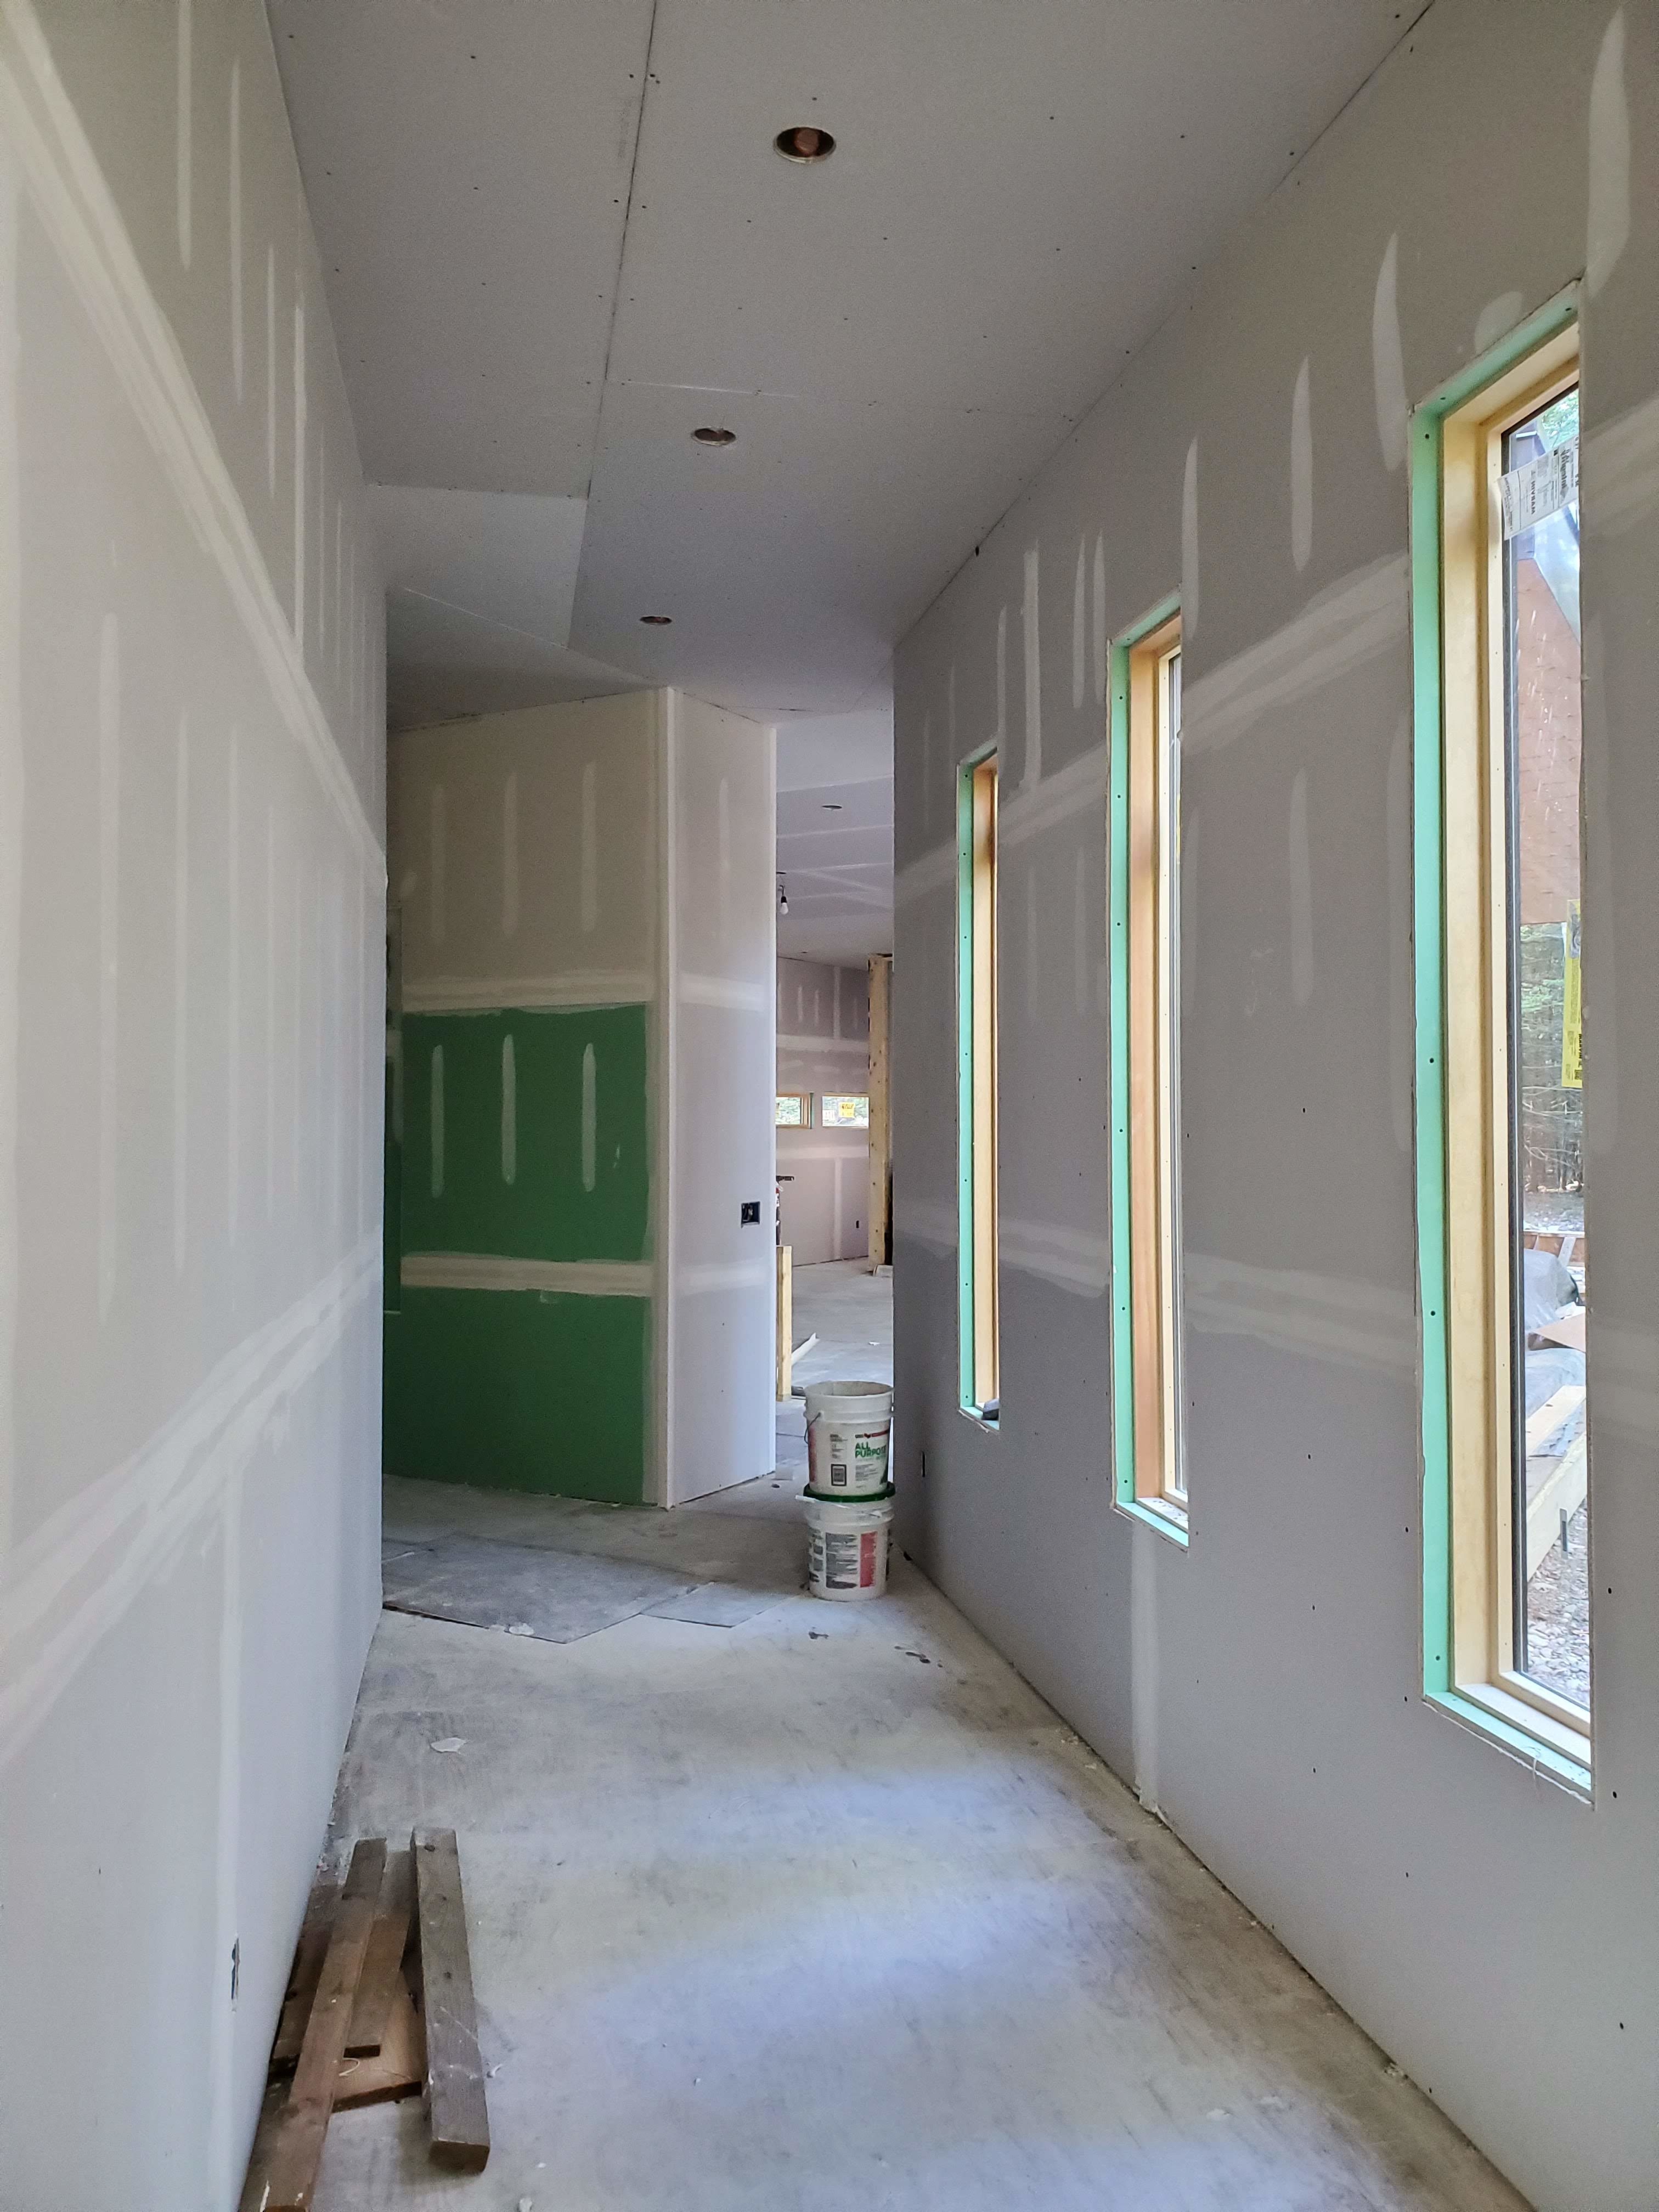 Construction Update: Modern Home in Hudson Valley